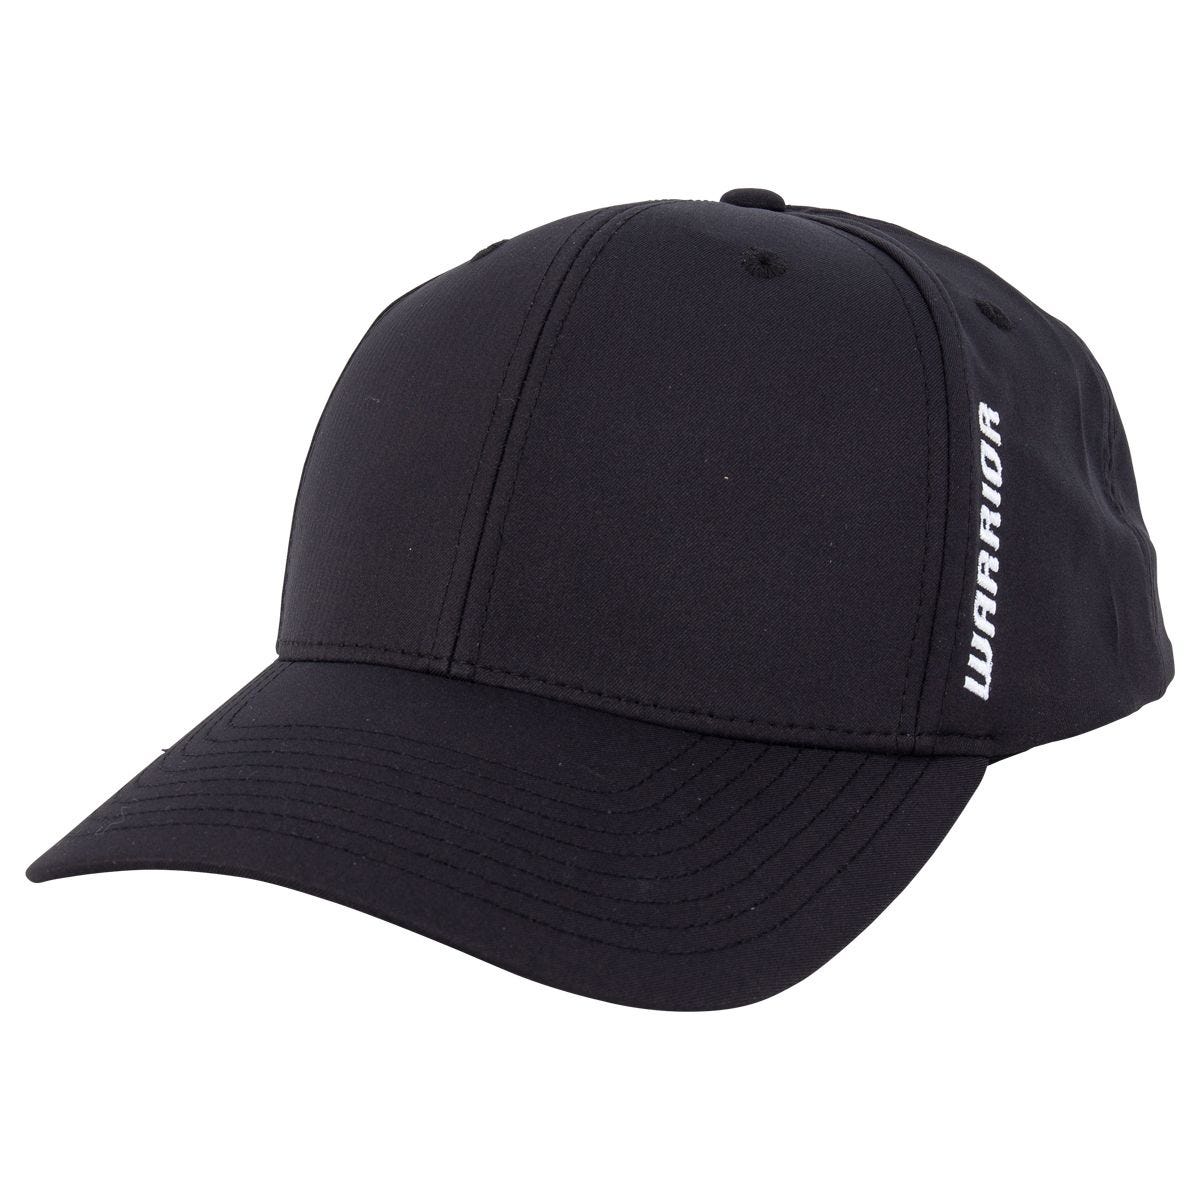 Kaizen31 Snap Back Trucker Hat Men - Mesh Baseball Cap - Warrior/Samurai,  One Size Black, Black, One size : : Fashion